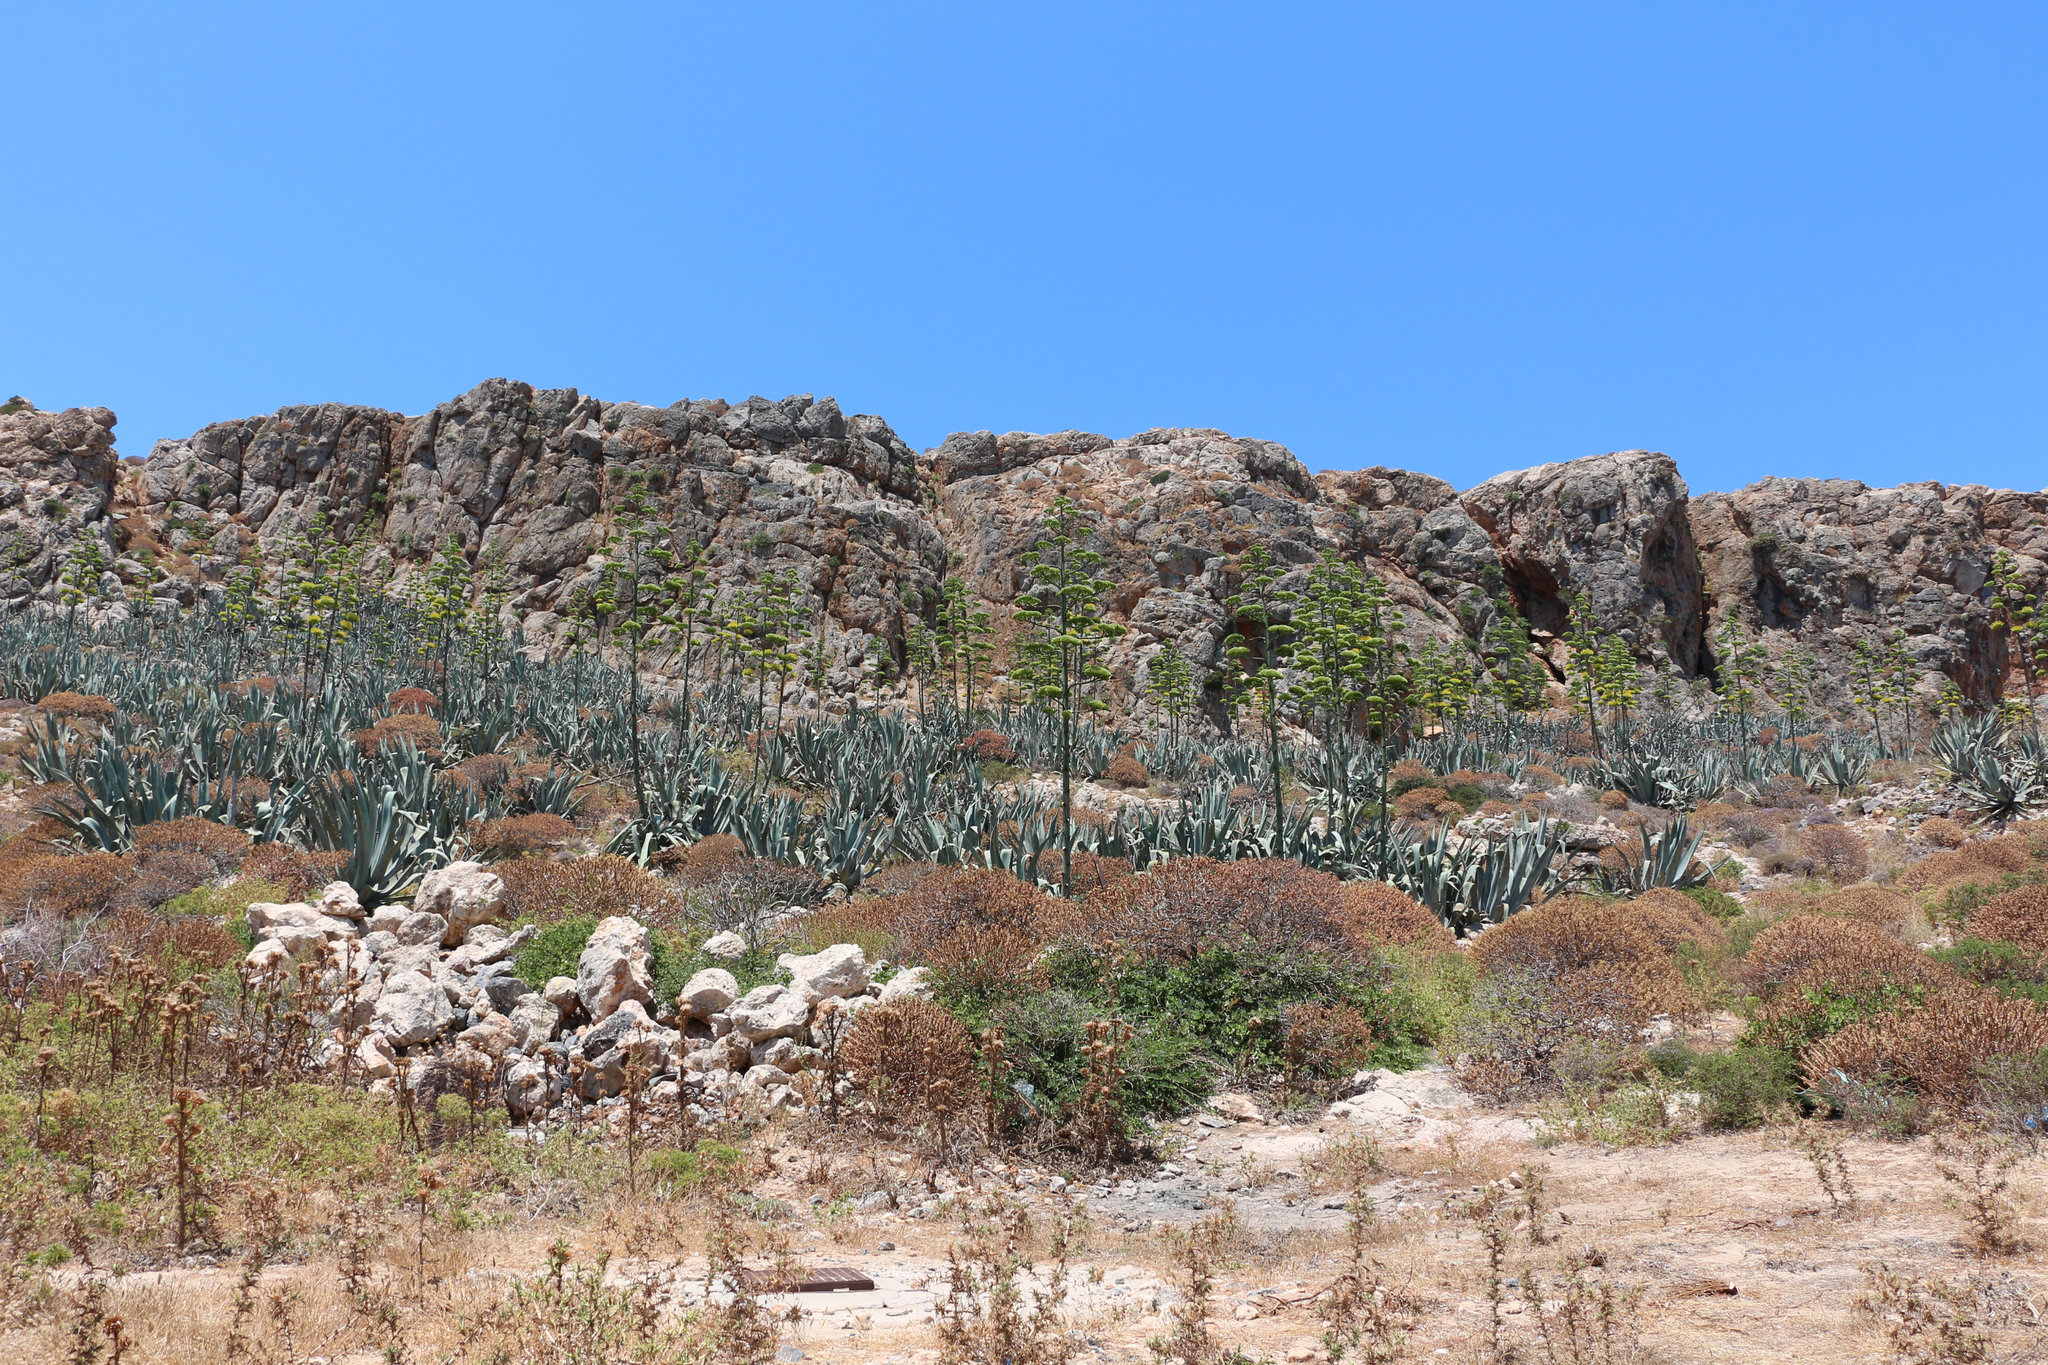 Plants at Gramvousa island